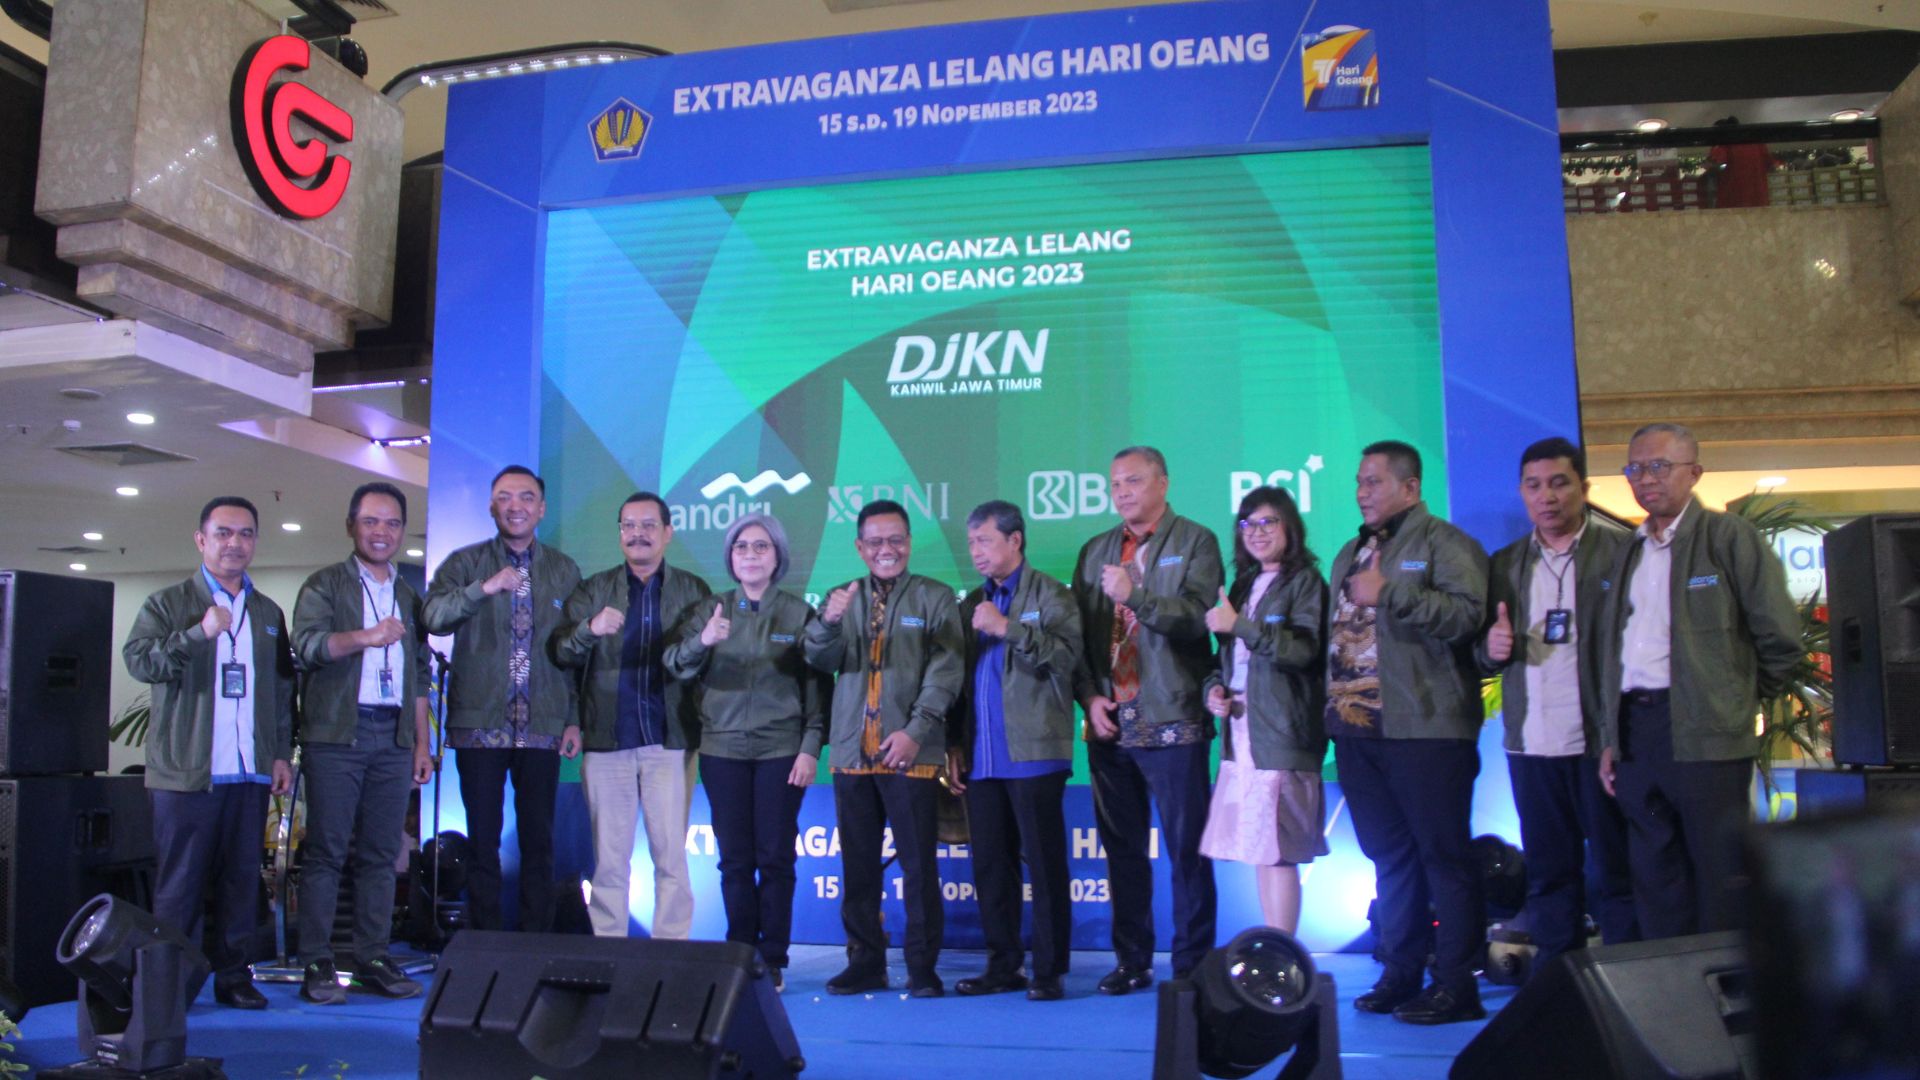  Kolaborasi Gelar Extravaganza Lelang  Hari Oeang 2023 : Dorong Perekonomian Jawa Timur